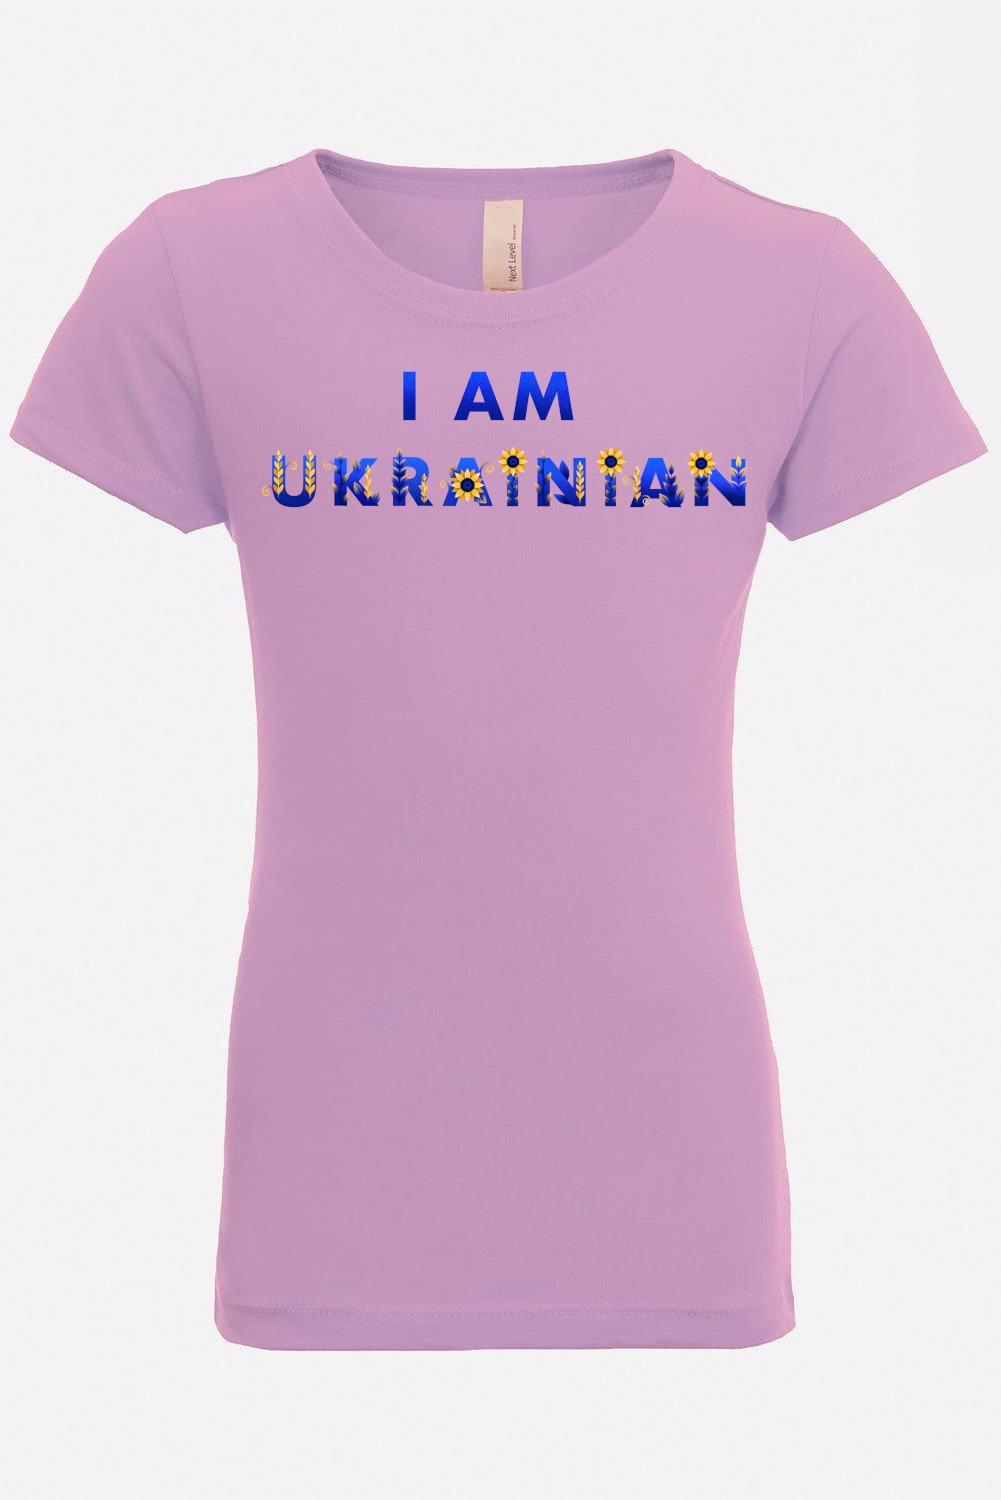 Girl's t-shirt "I AM UKRAINIAN"